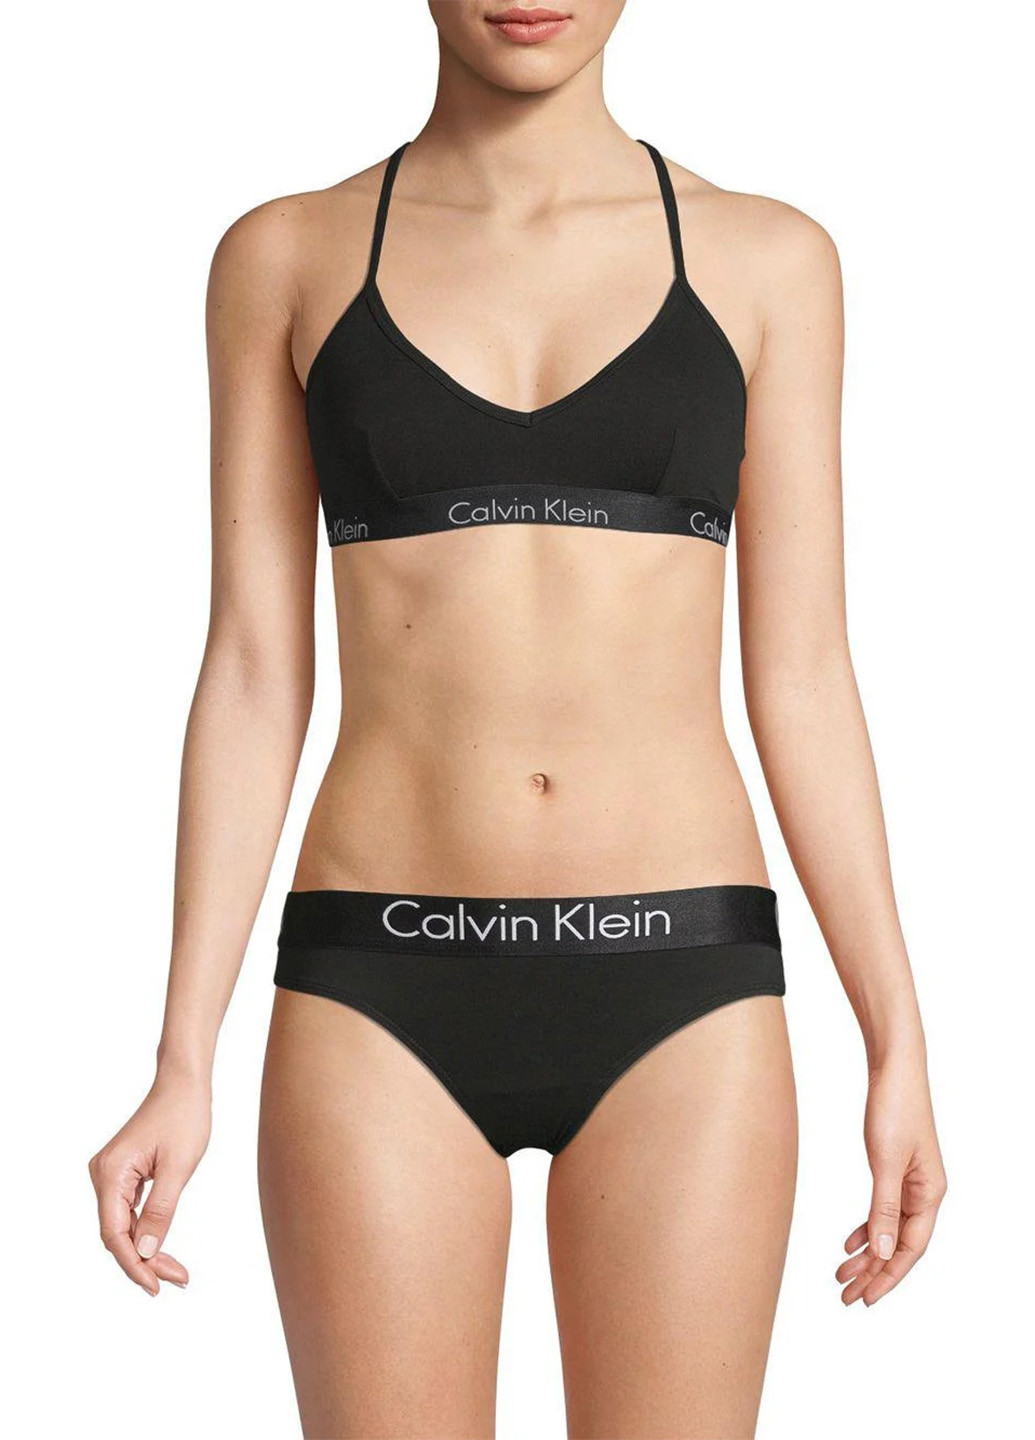 Чёрный бралетт бюстгальтер Calvin Klein без косточек хлопок, трикотаж